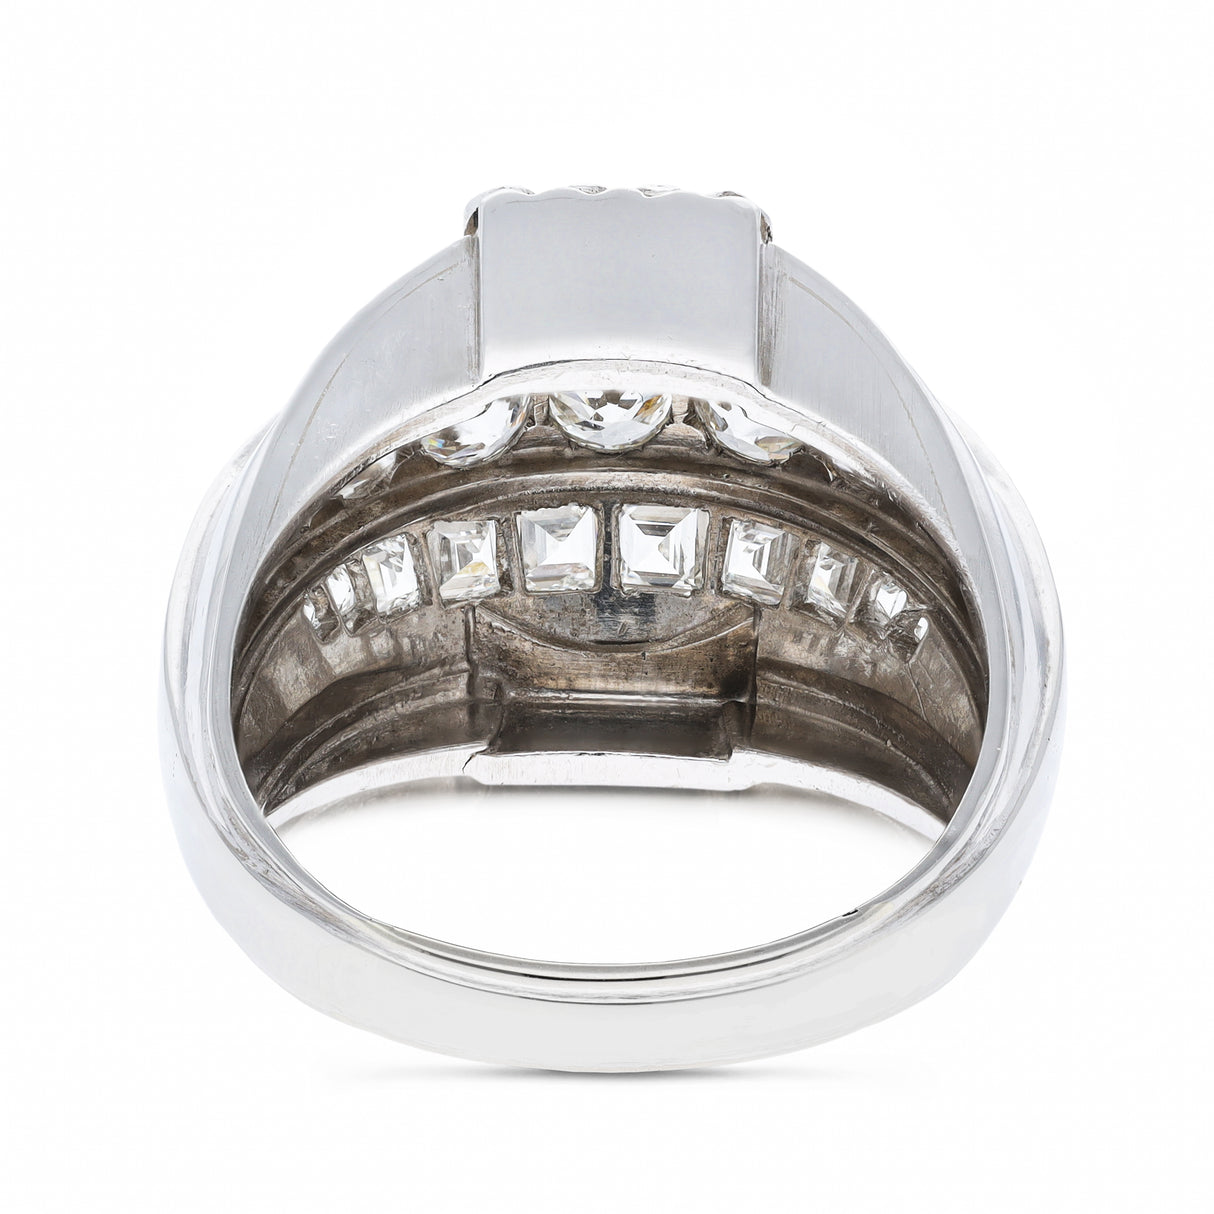 French, Art Deco 4ct diamond bombé dress ring, platinum